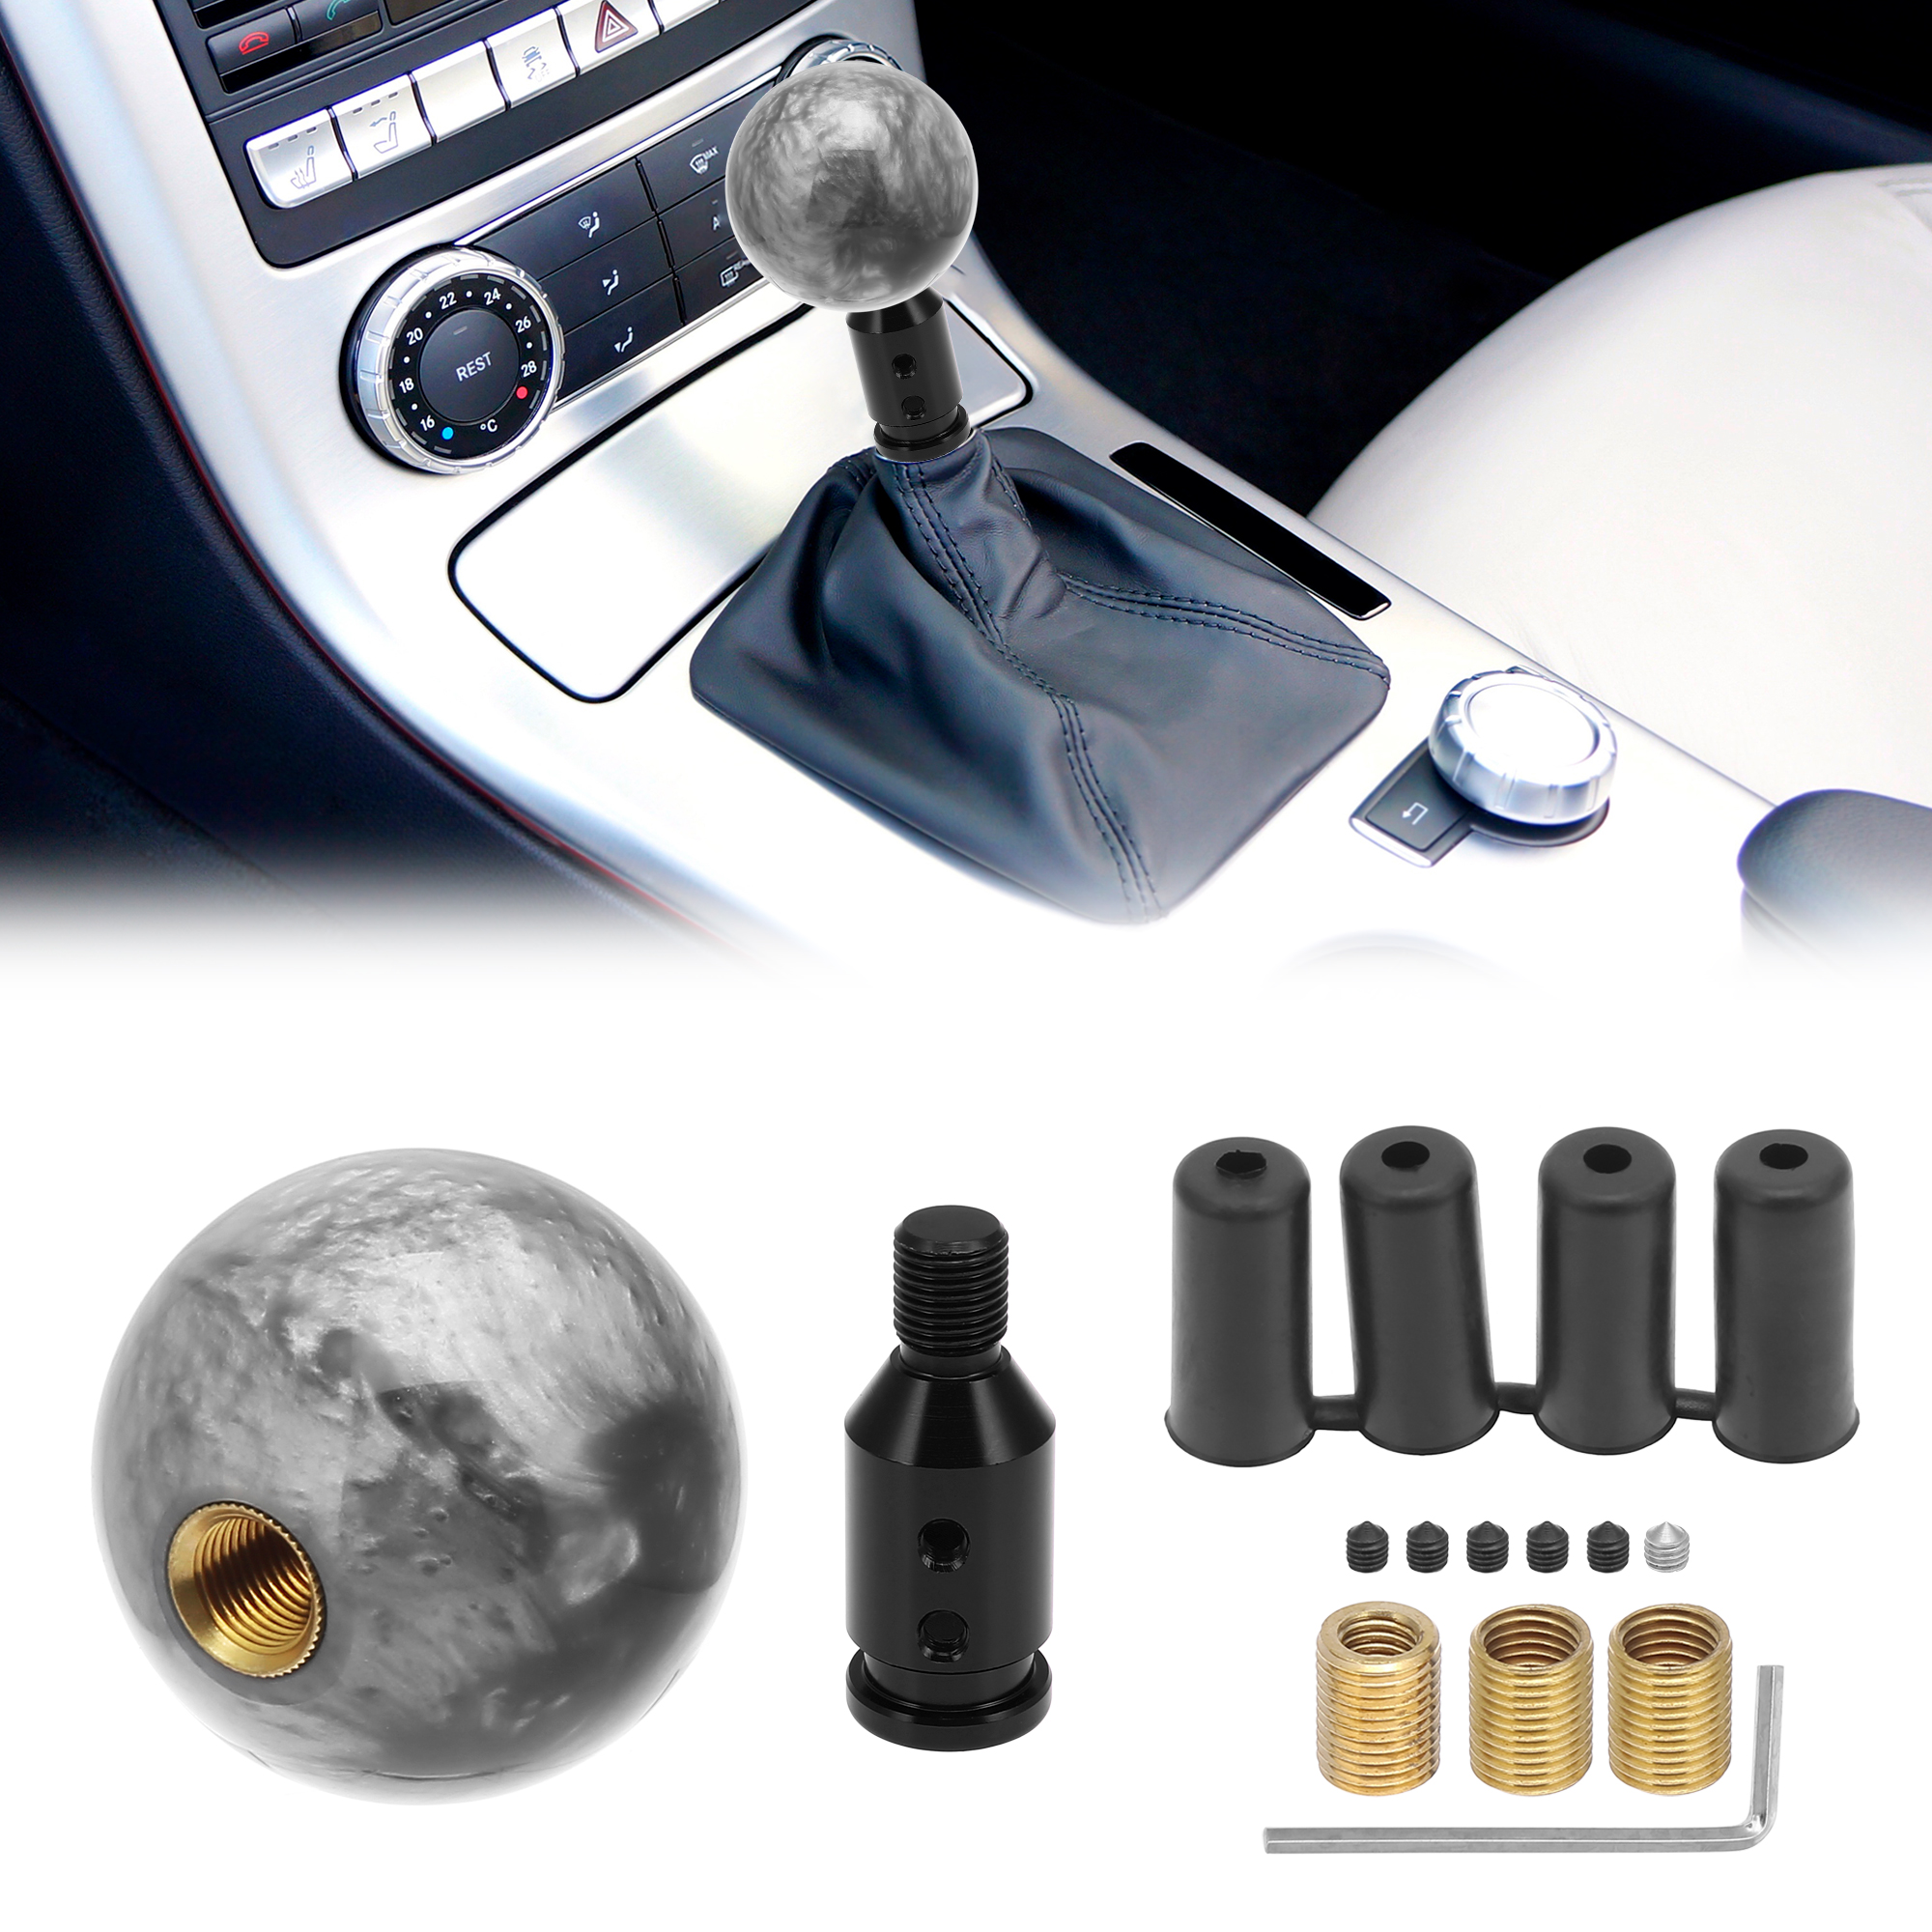 Unique Bargains Car Titanium Tone Gear Shift Knob with M12x1.25 Black Shift Knob Adapter Set